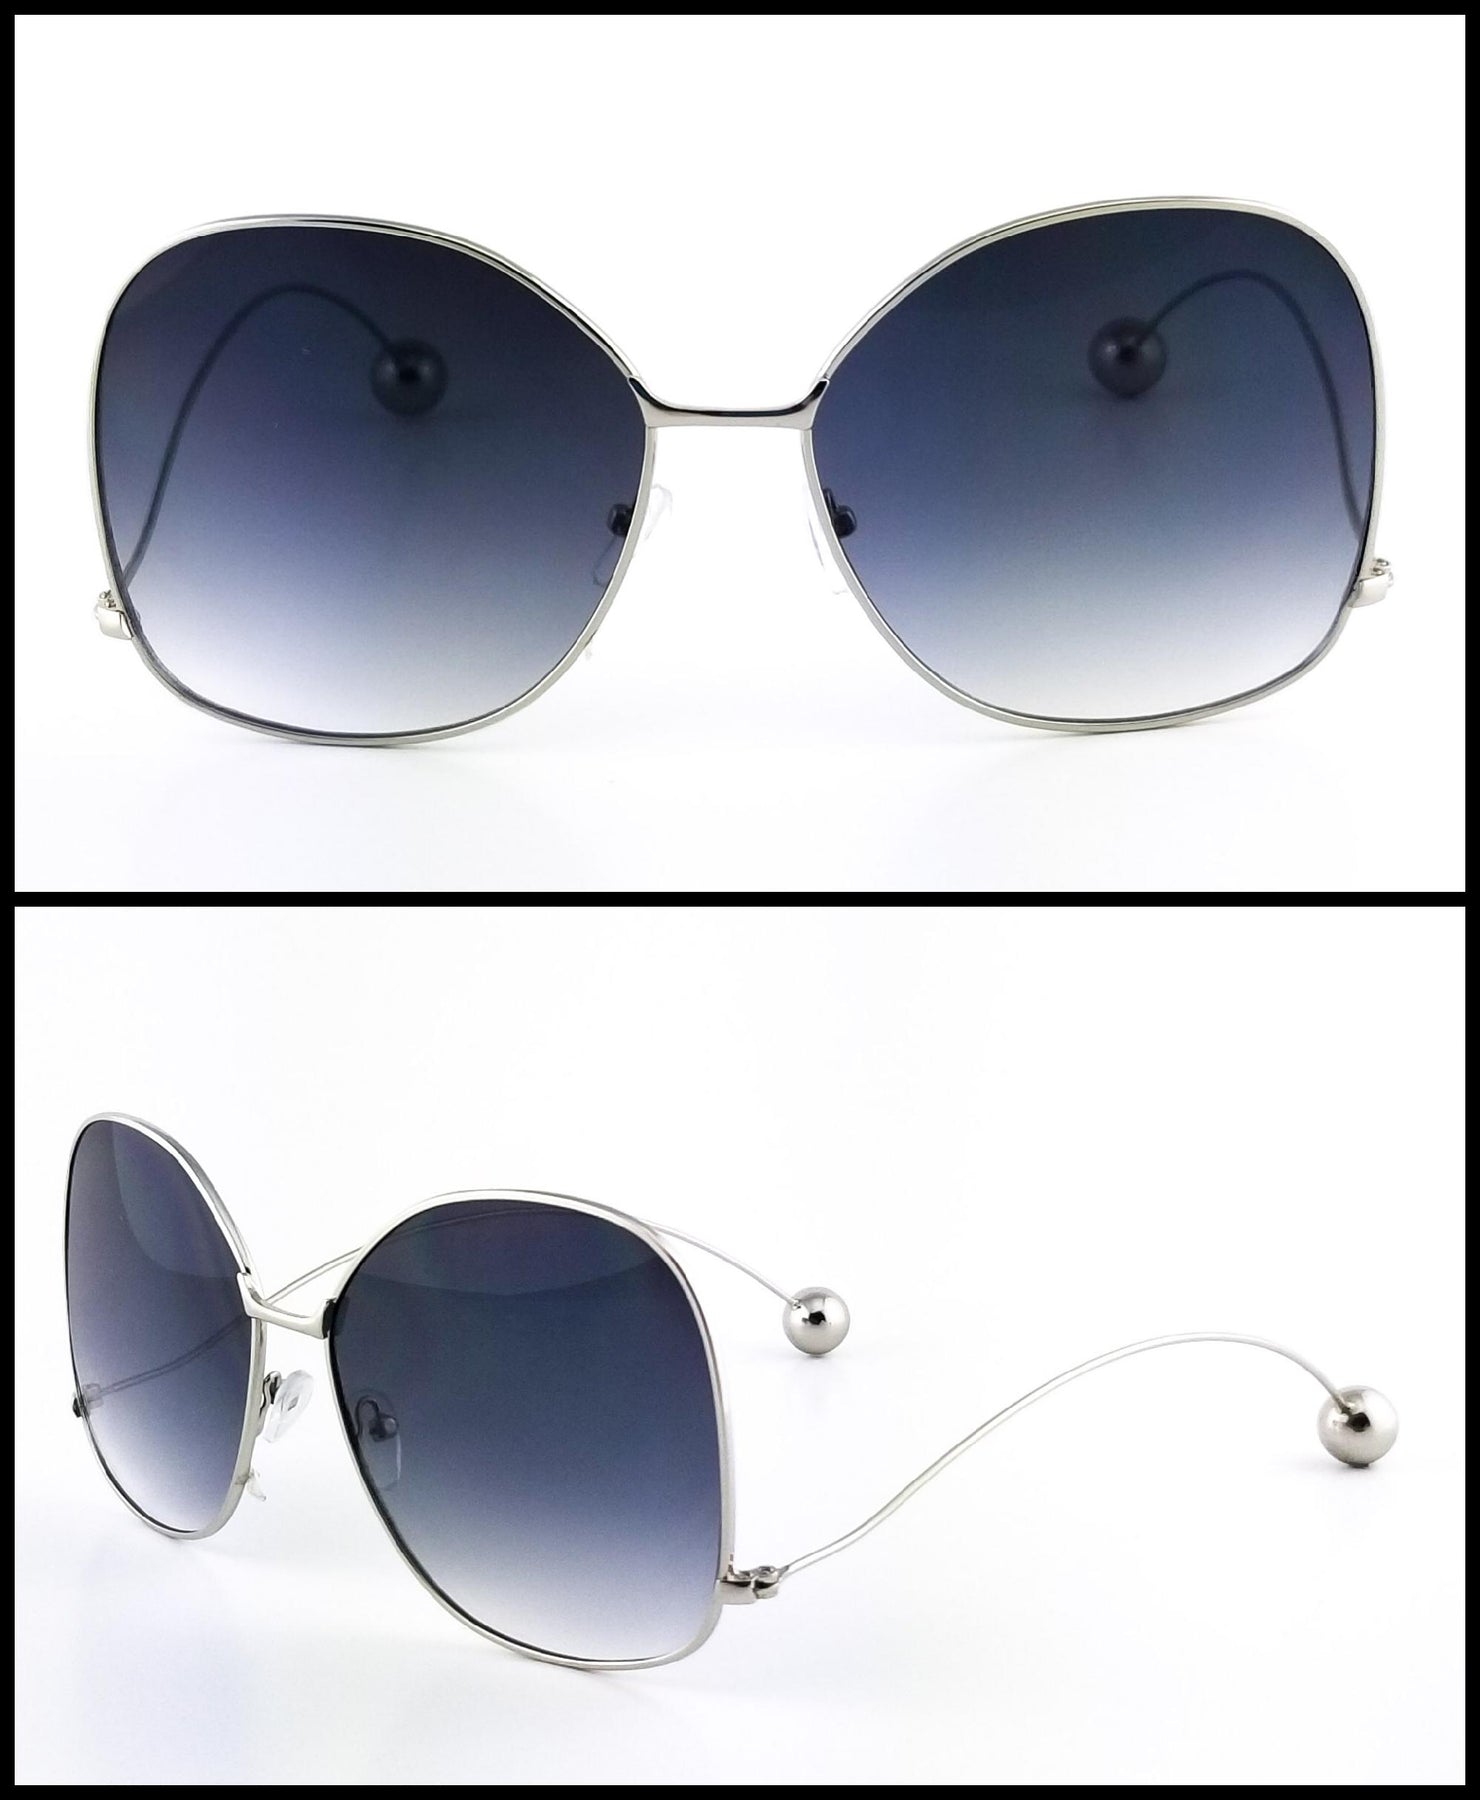 Buy Aaliyah Sunglasses - Branded Sunglasses for Women Online